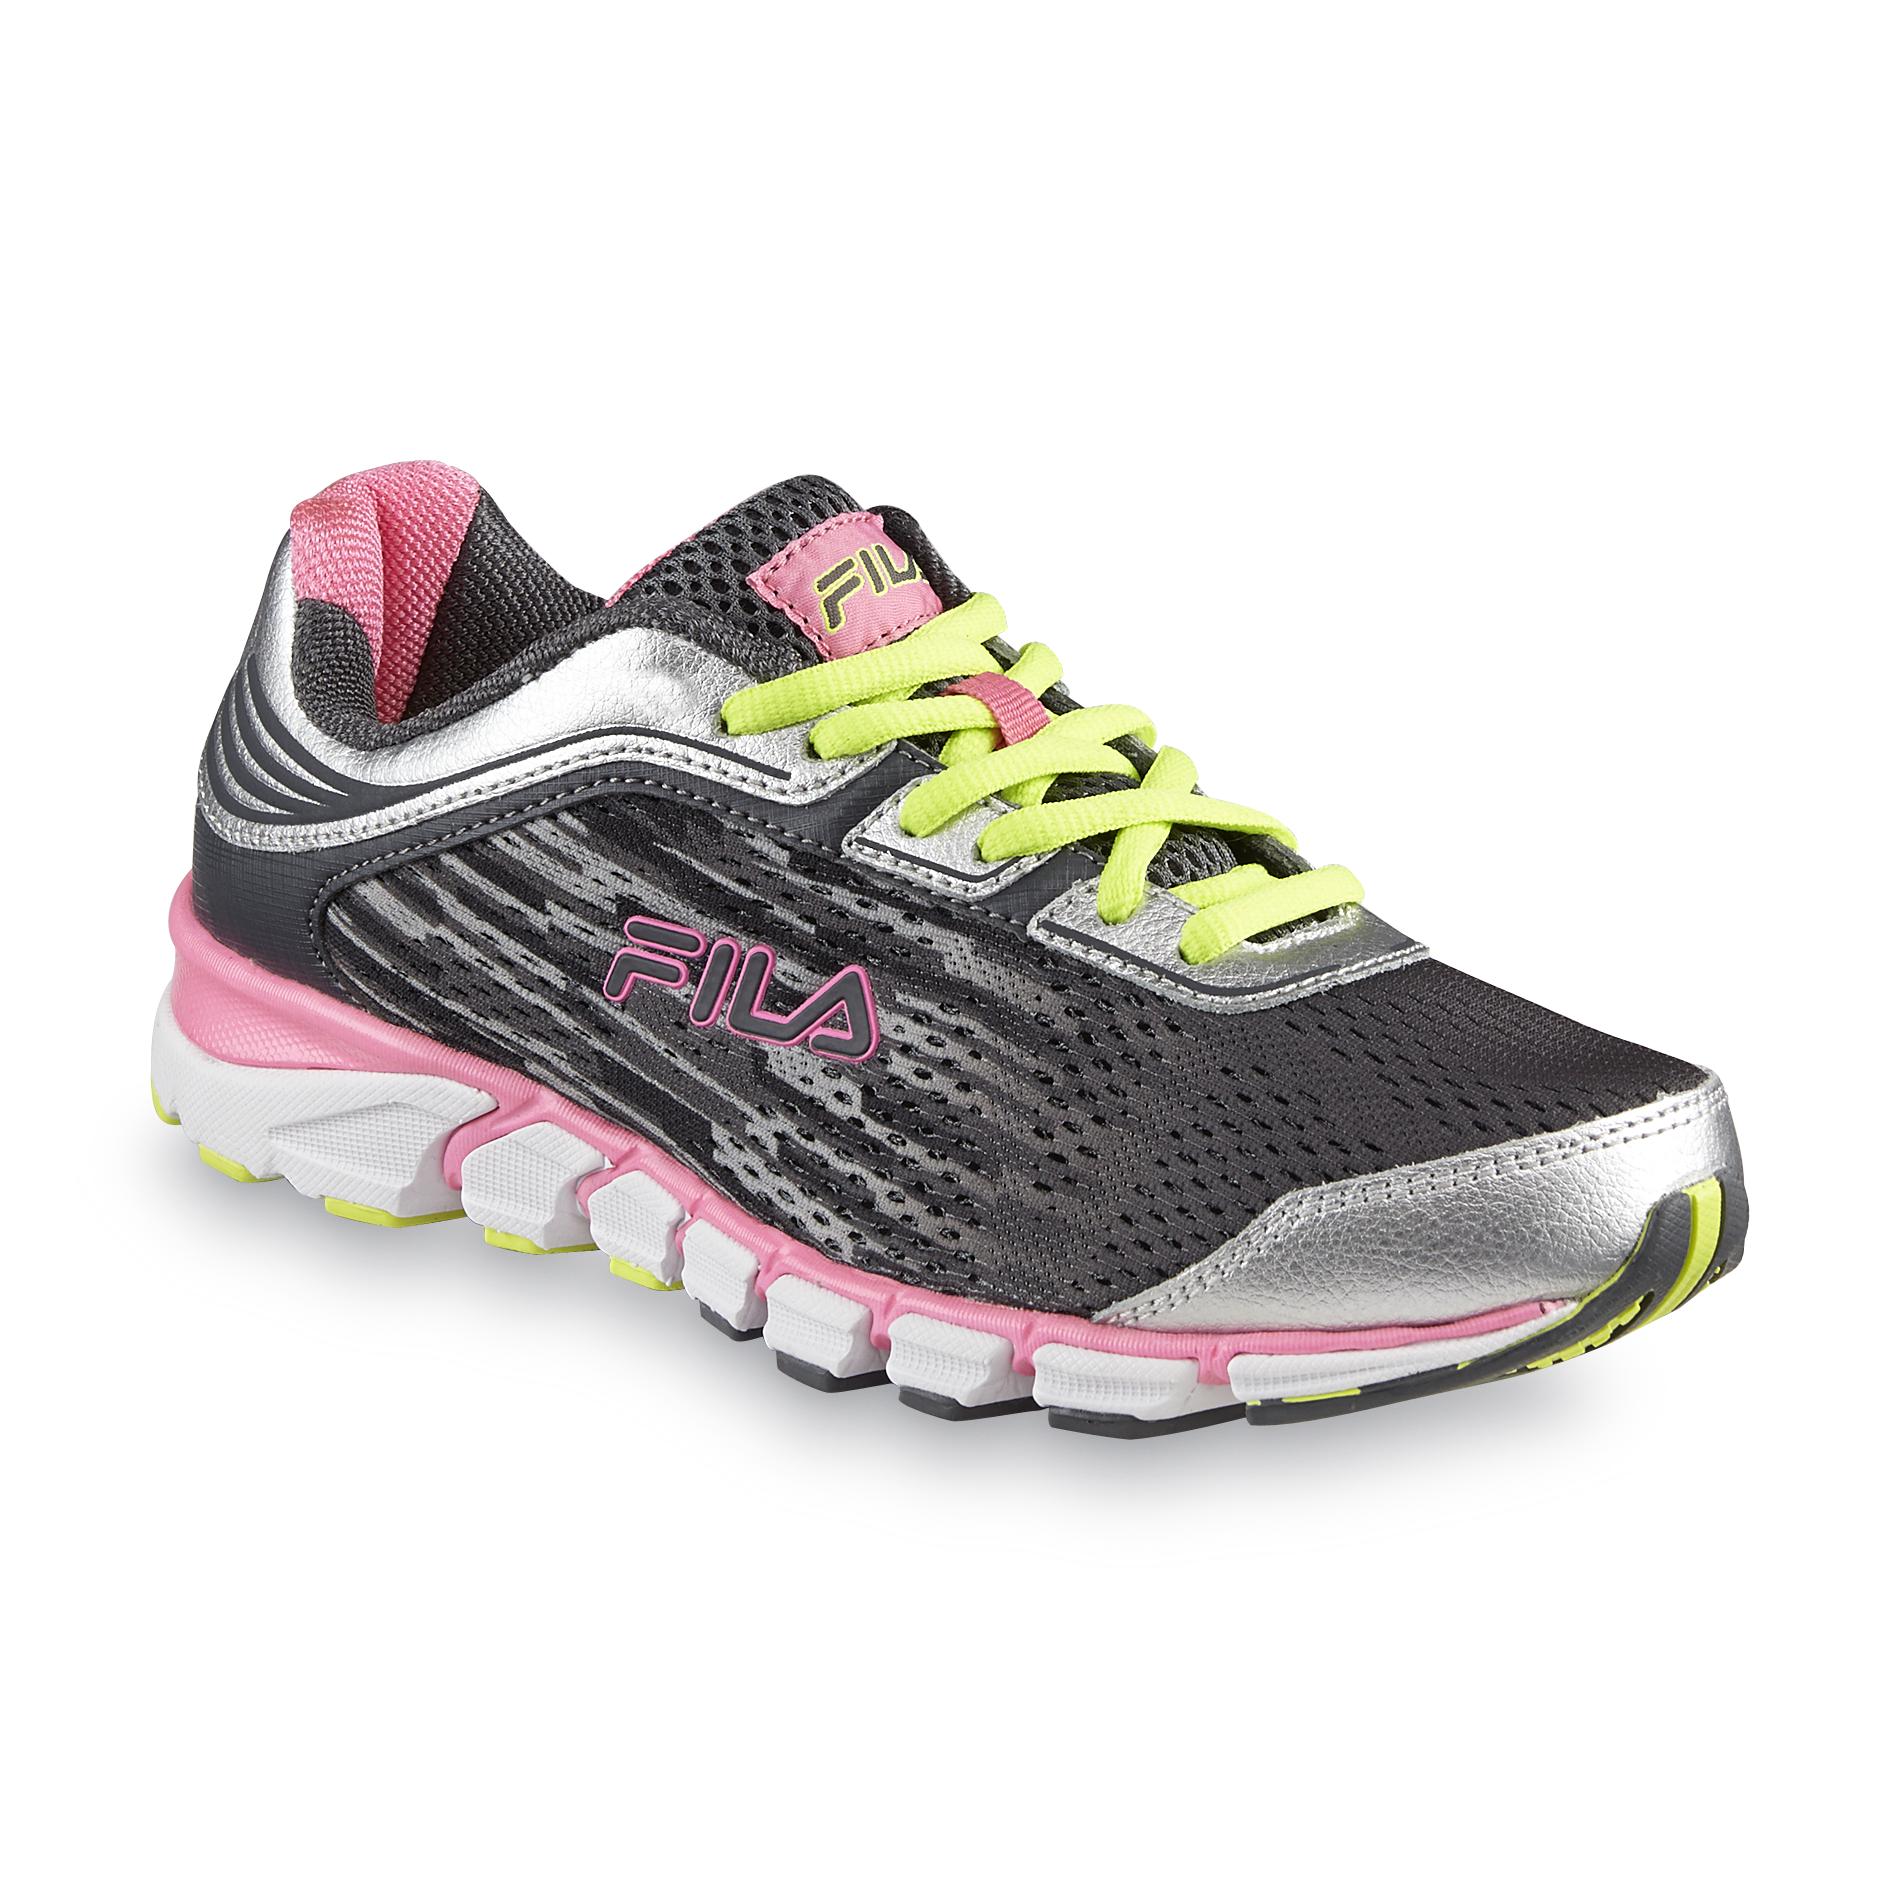 Fila Women's Turbo Fuel 2 Linear Energized Athletic Shoe - Gray/Pink